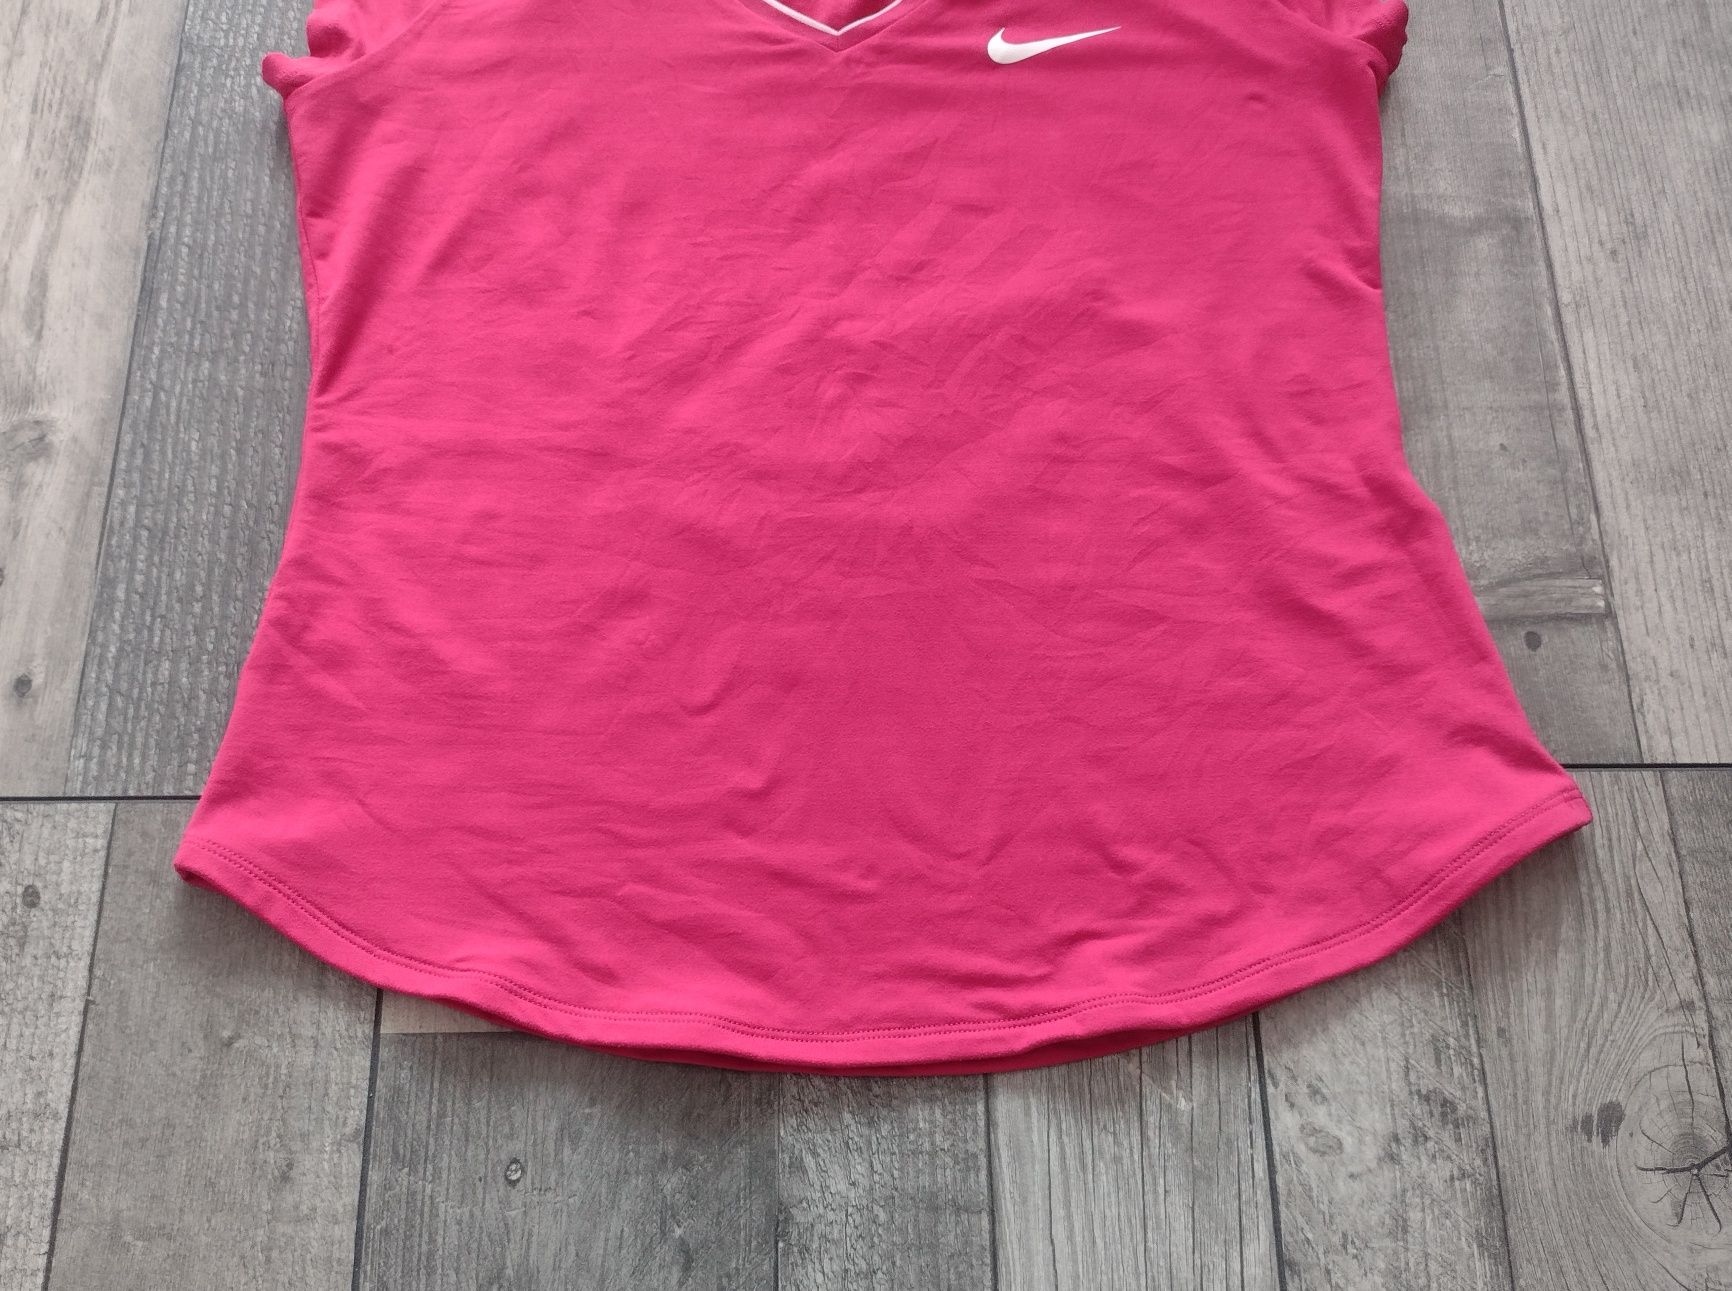 Koszulka Nike damska roz. S/M